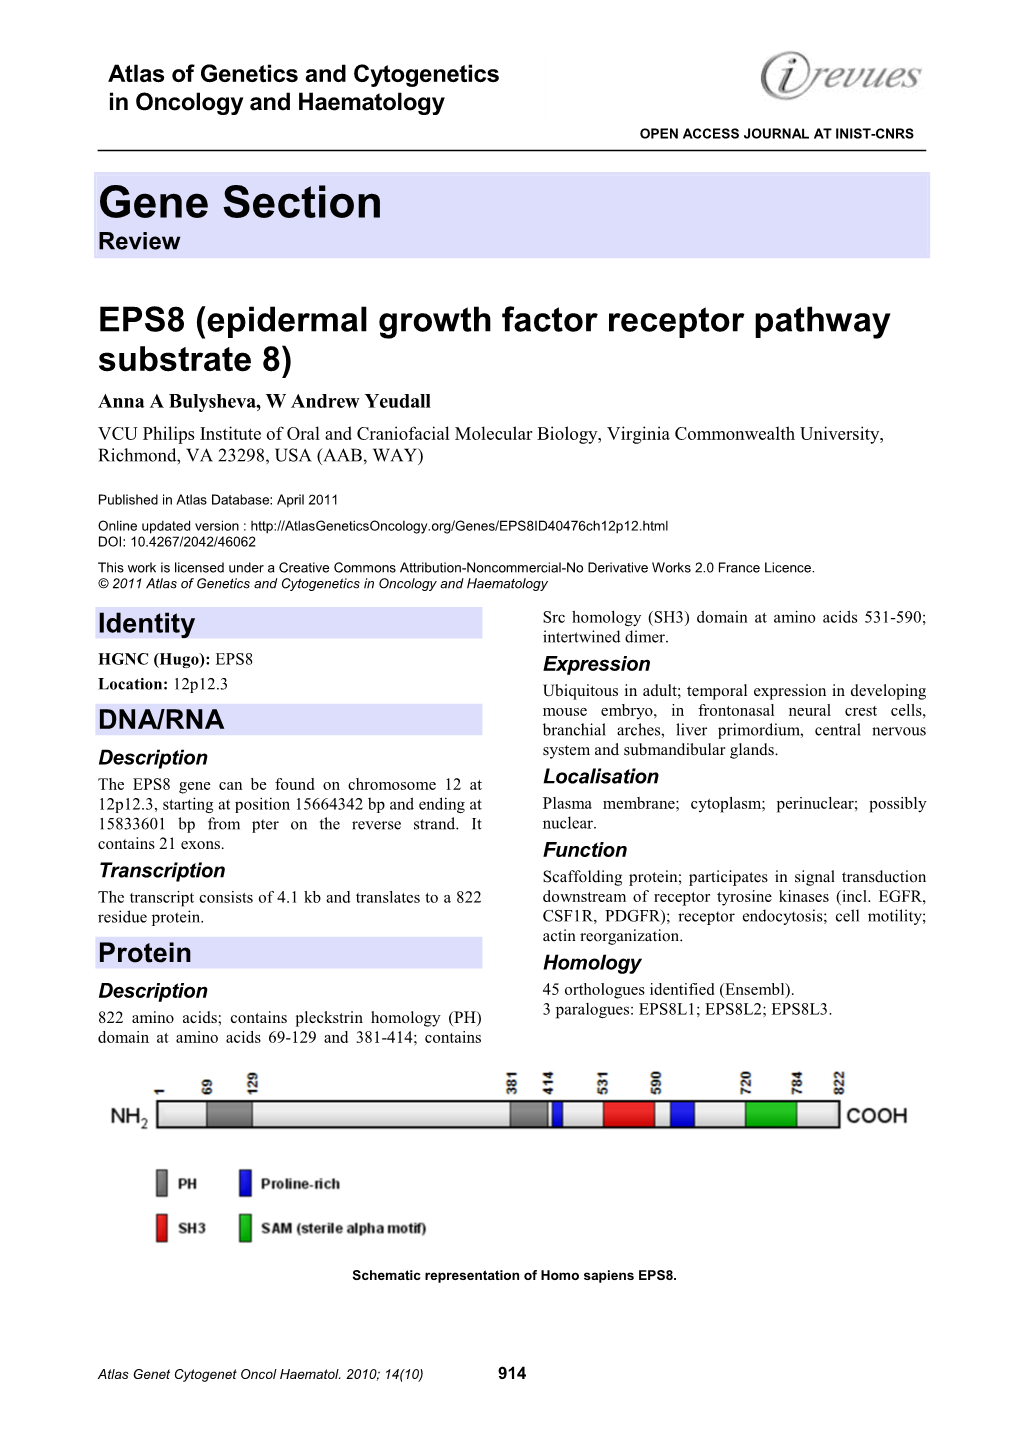 EPS8 (Epidermal Growth Factor Receptor Pathway Substrate 8)